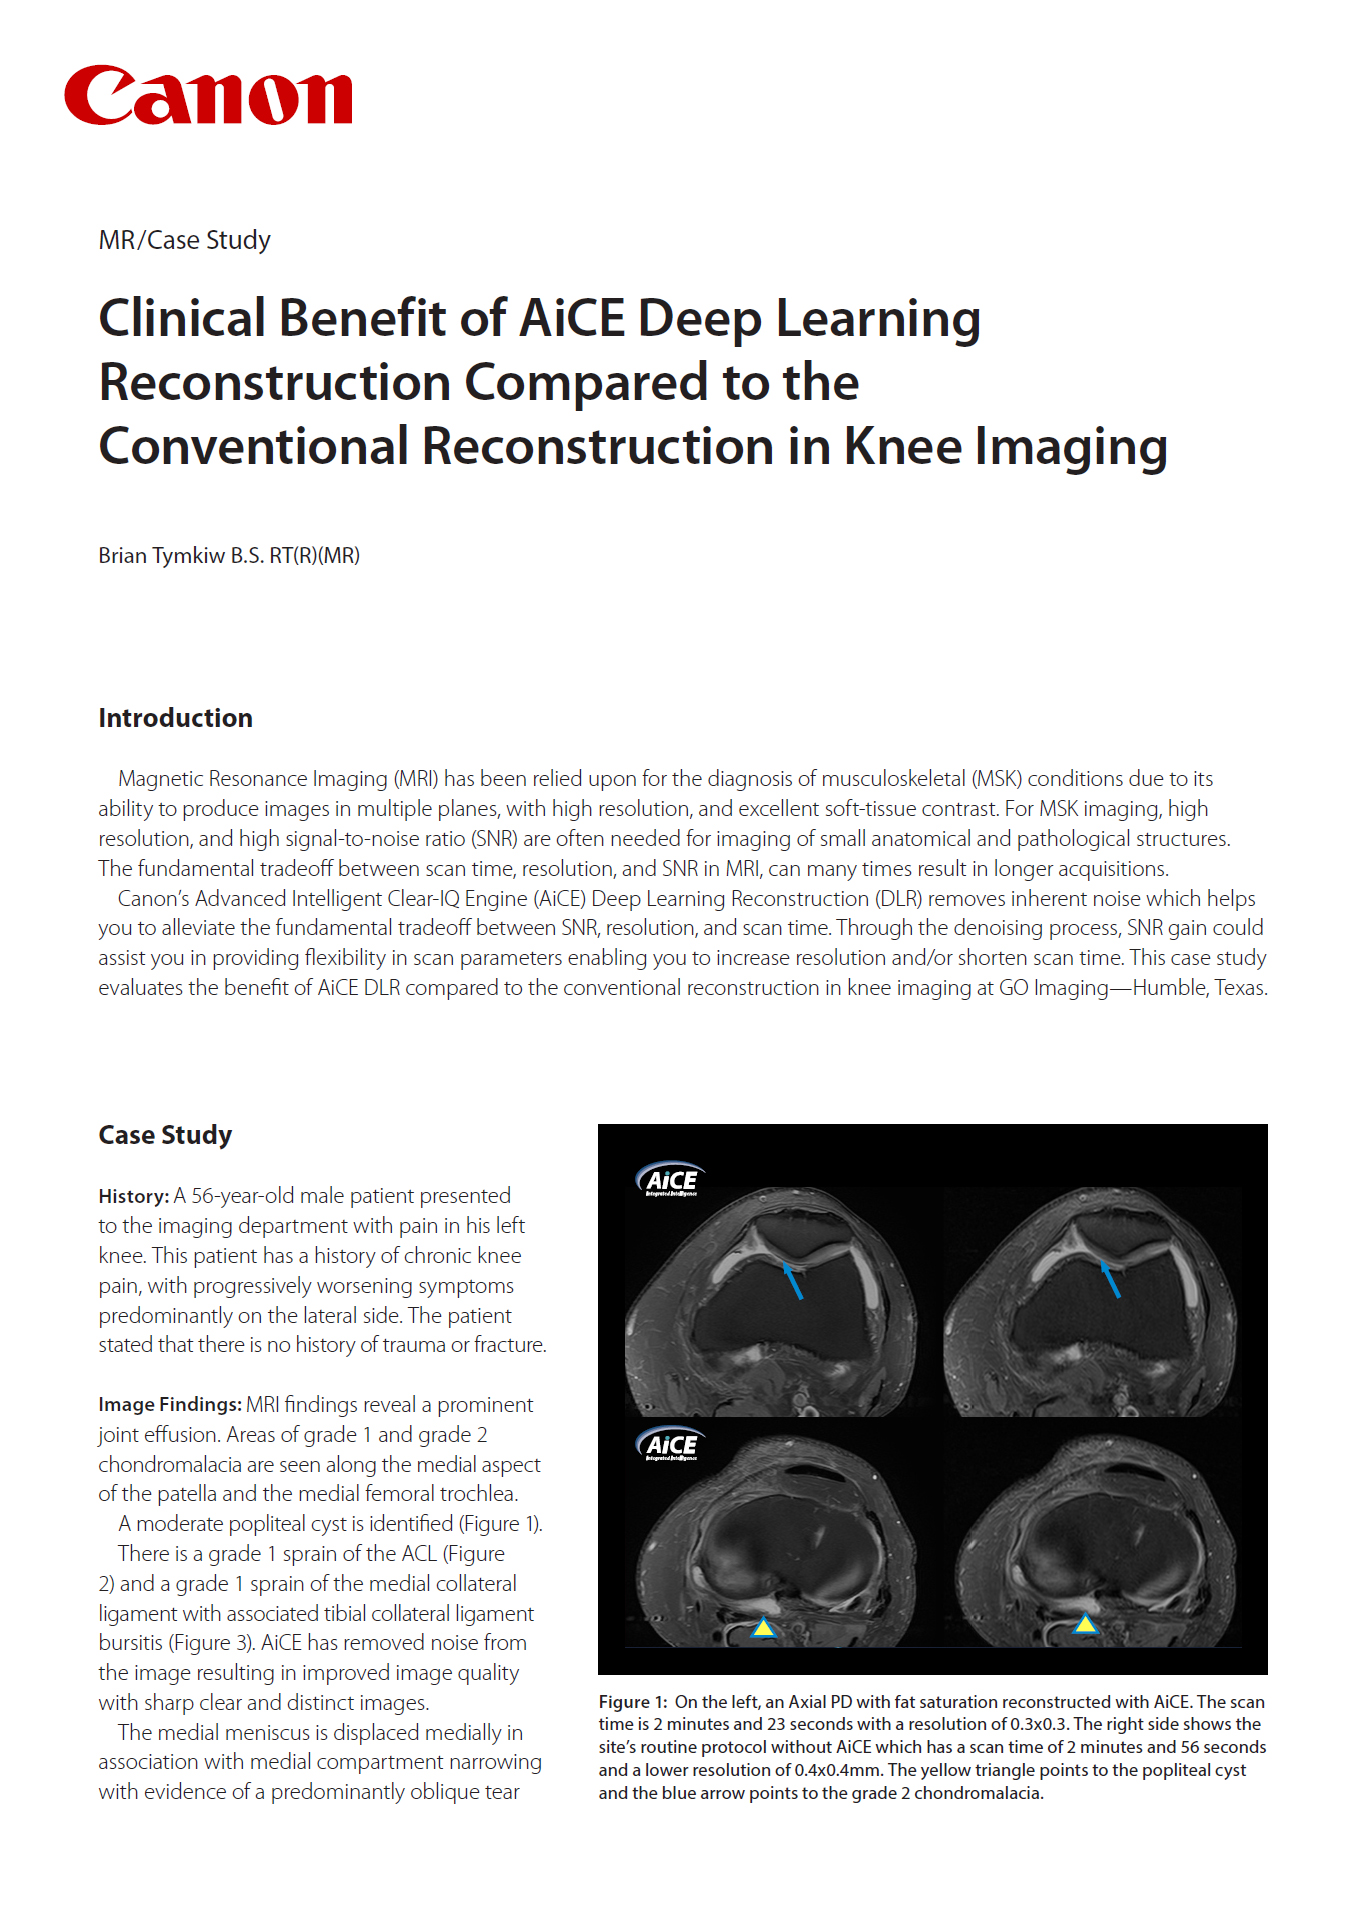 MR AiCE Knee Imaging Case Study